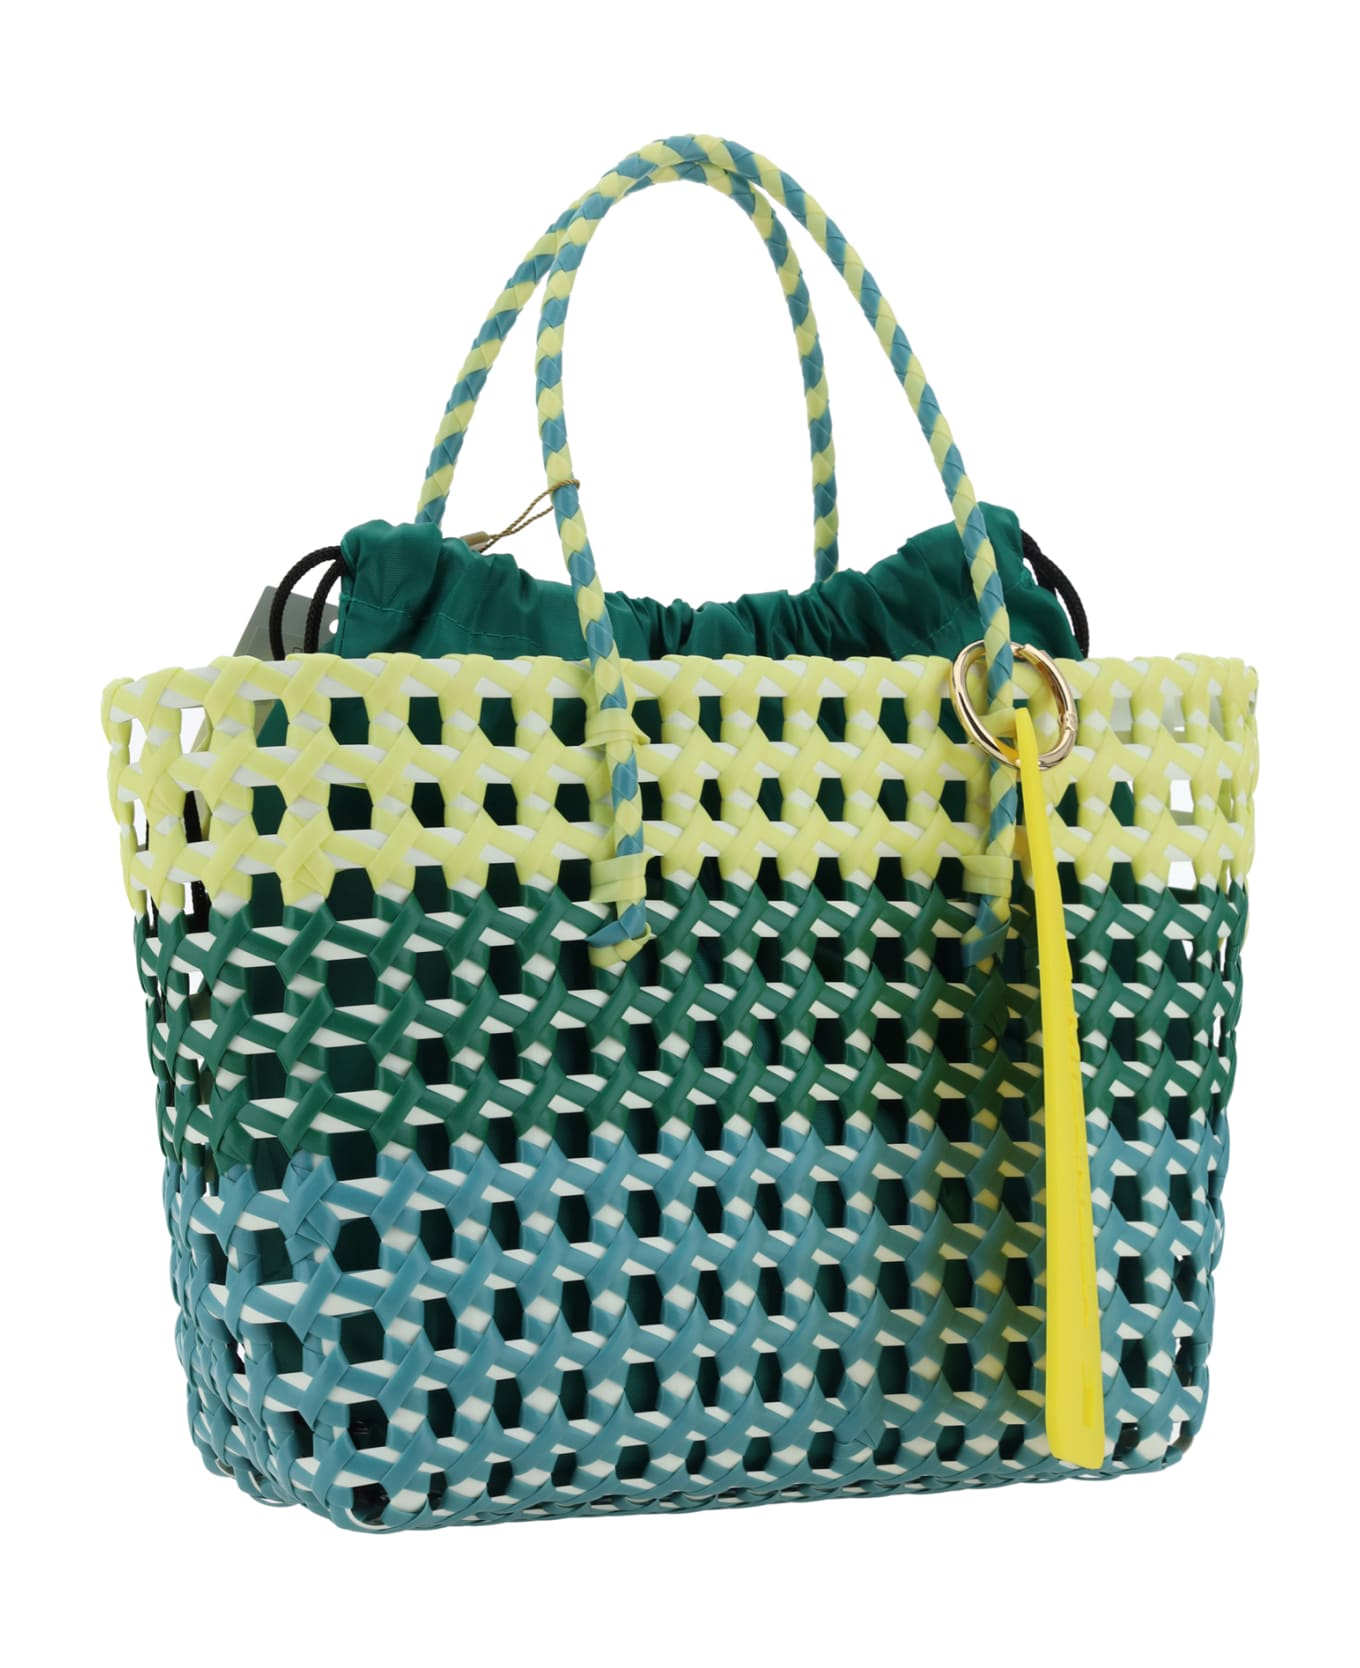 LaMilanesa Negroni Handbag - Azzurro/verde/giallo